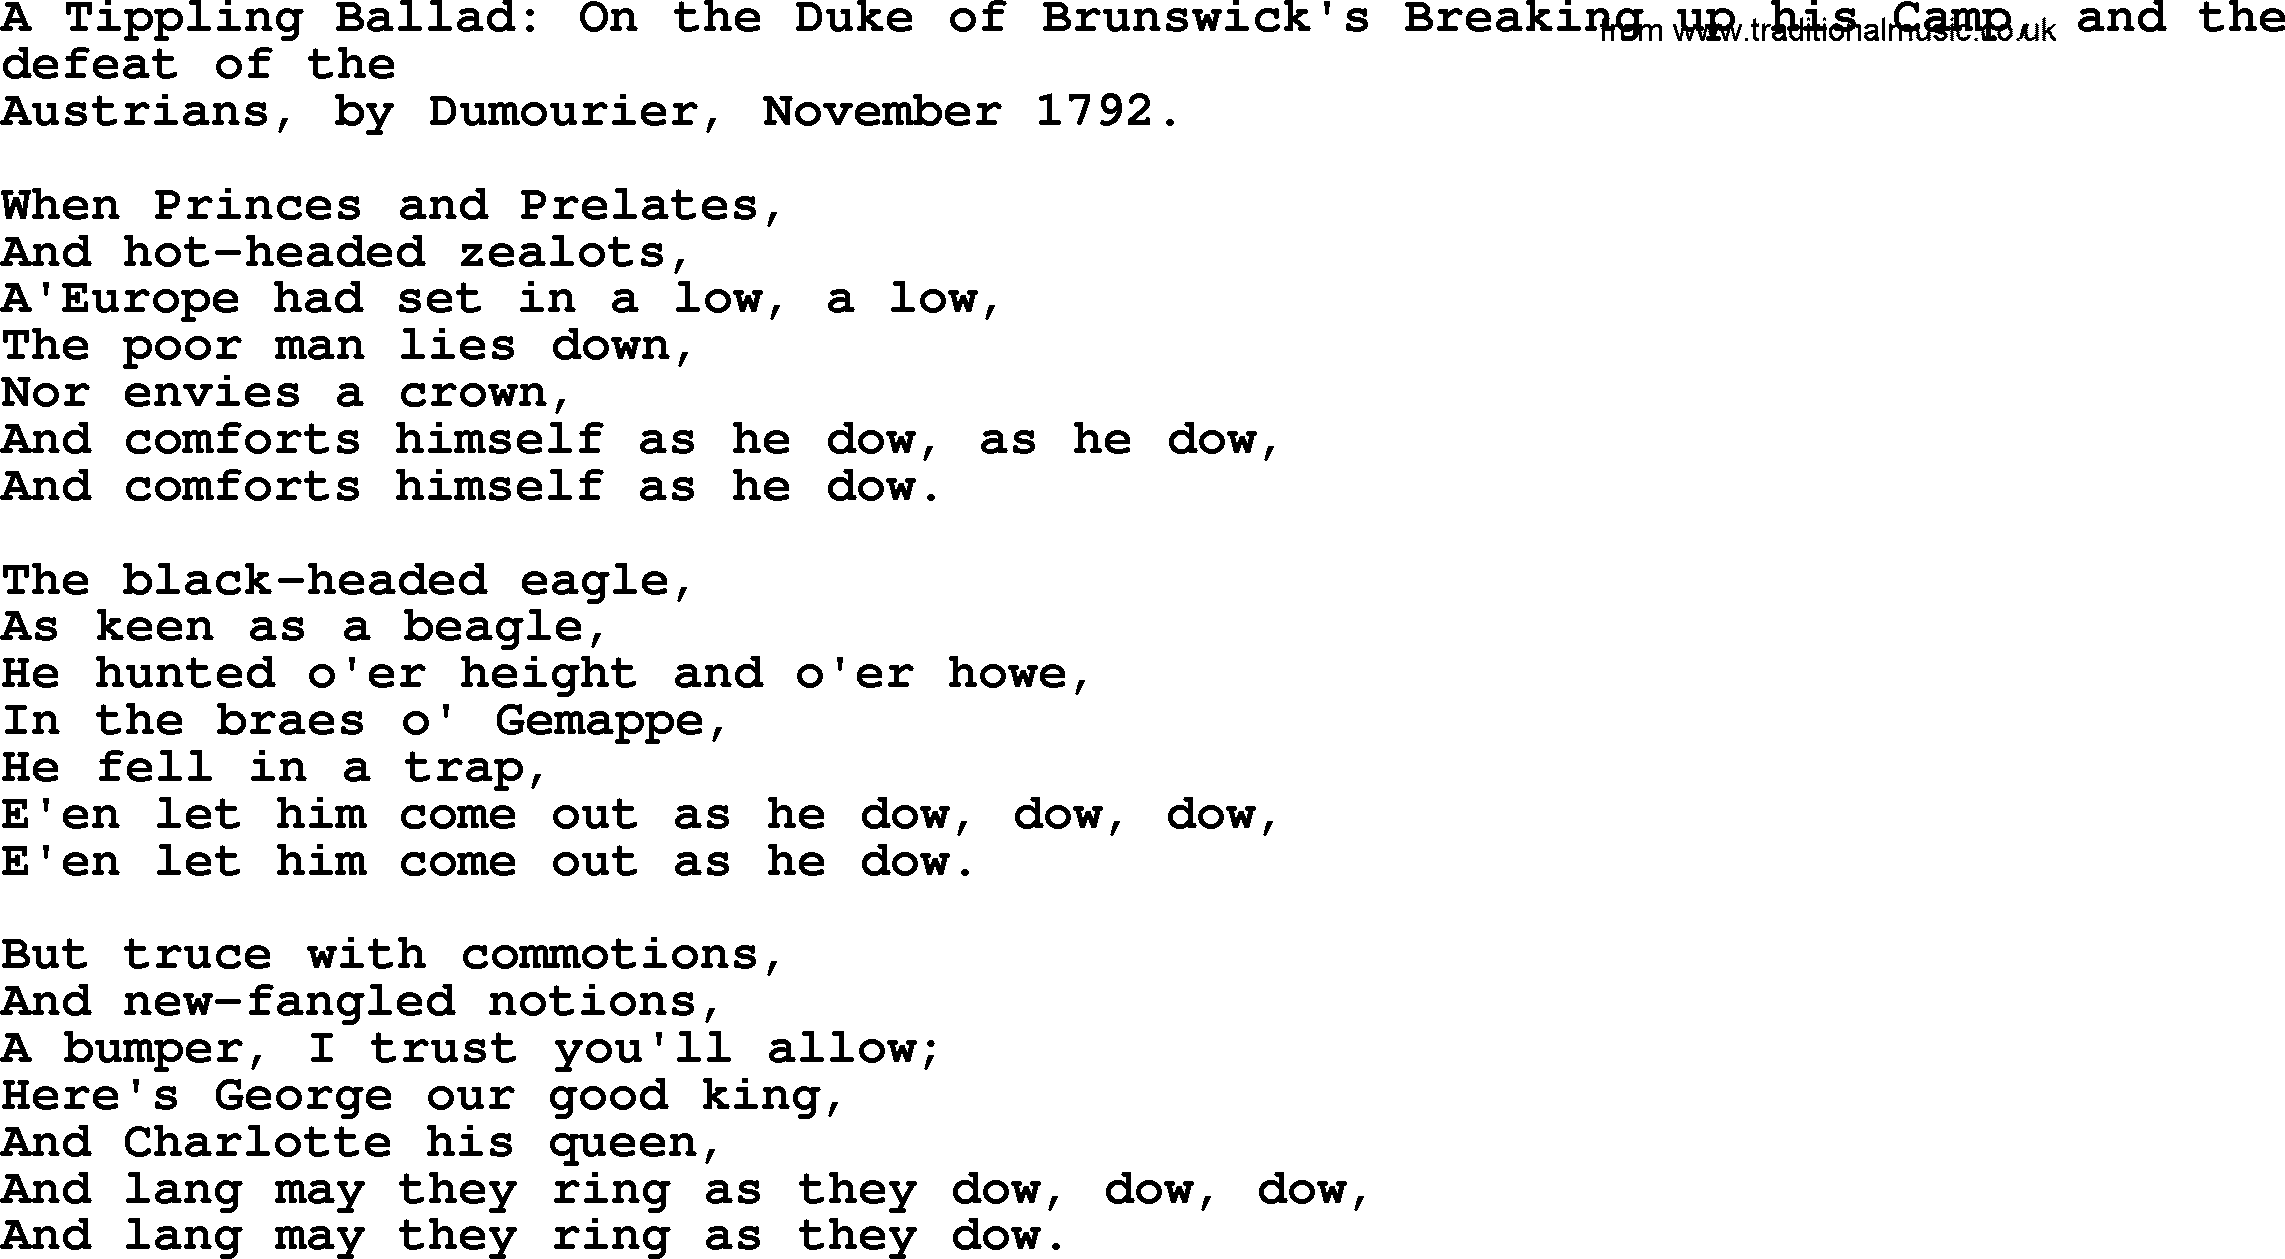 Robert Burns Songs & Lyrics: A Tippling Ballad On The Duke Of Brunswick's Breaking Up His Camp